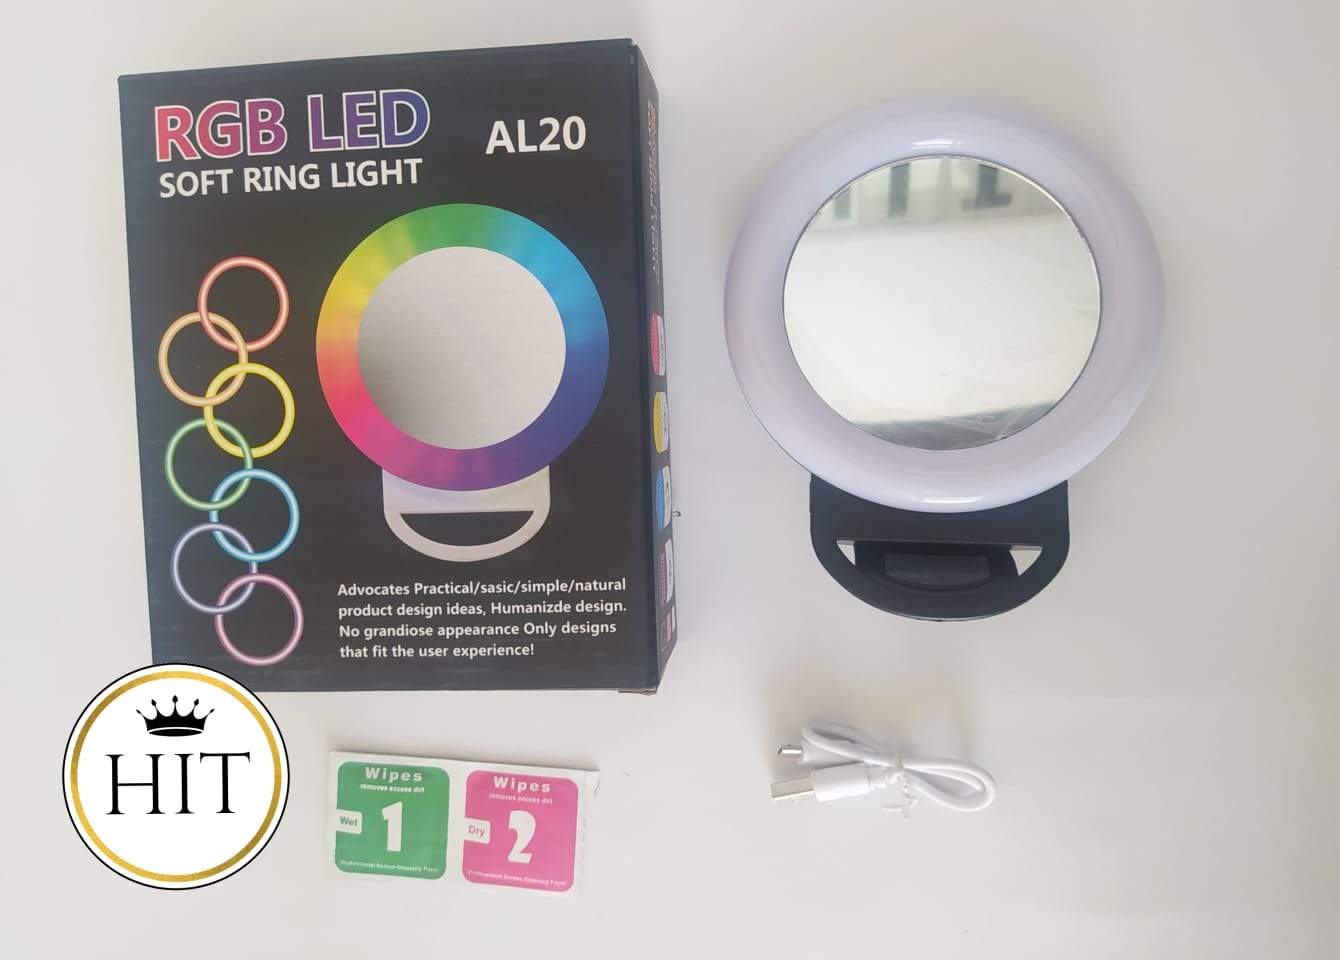 ARO DE LUZ RGB LED - colombiahit